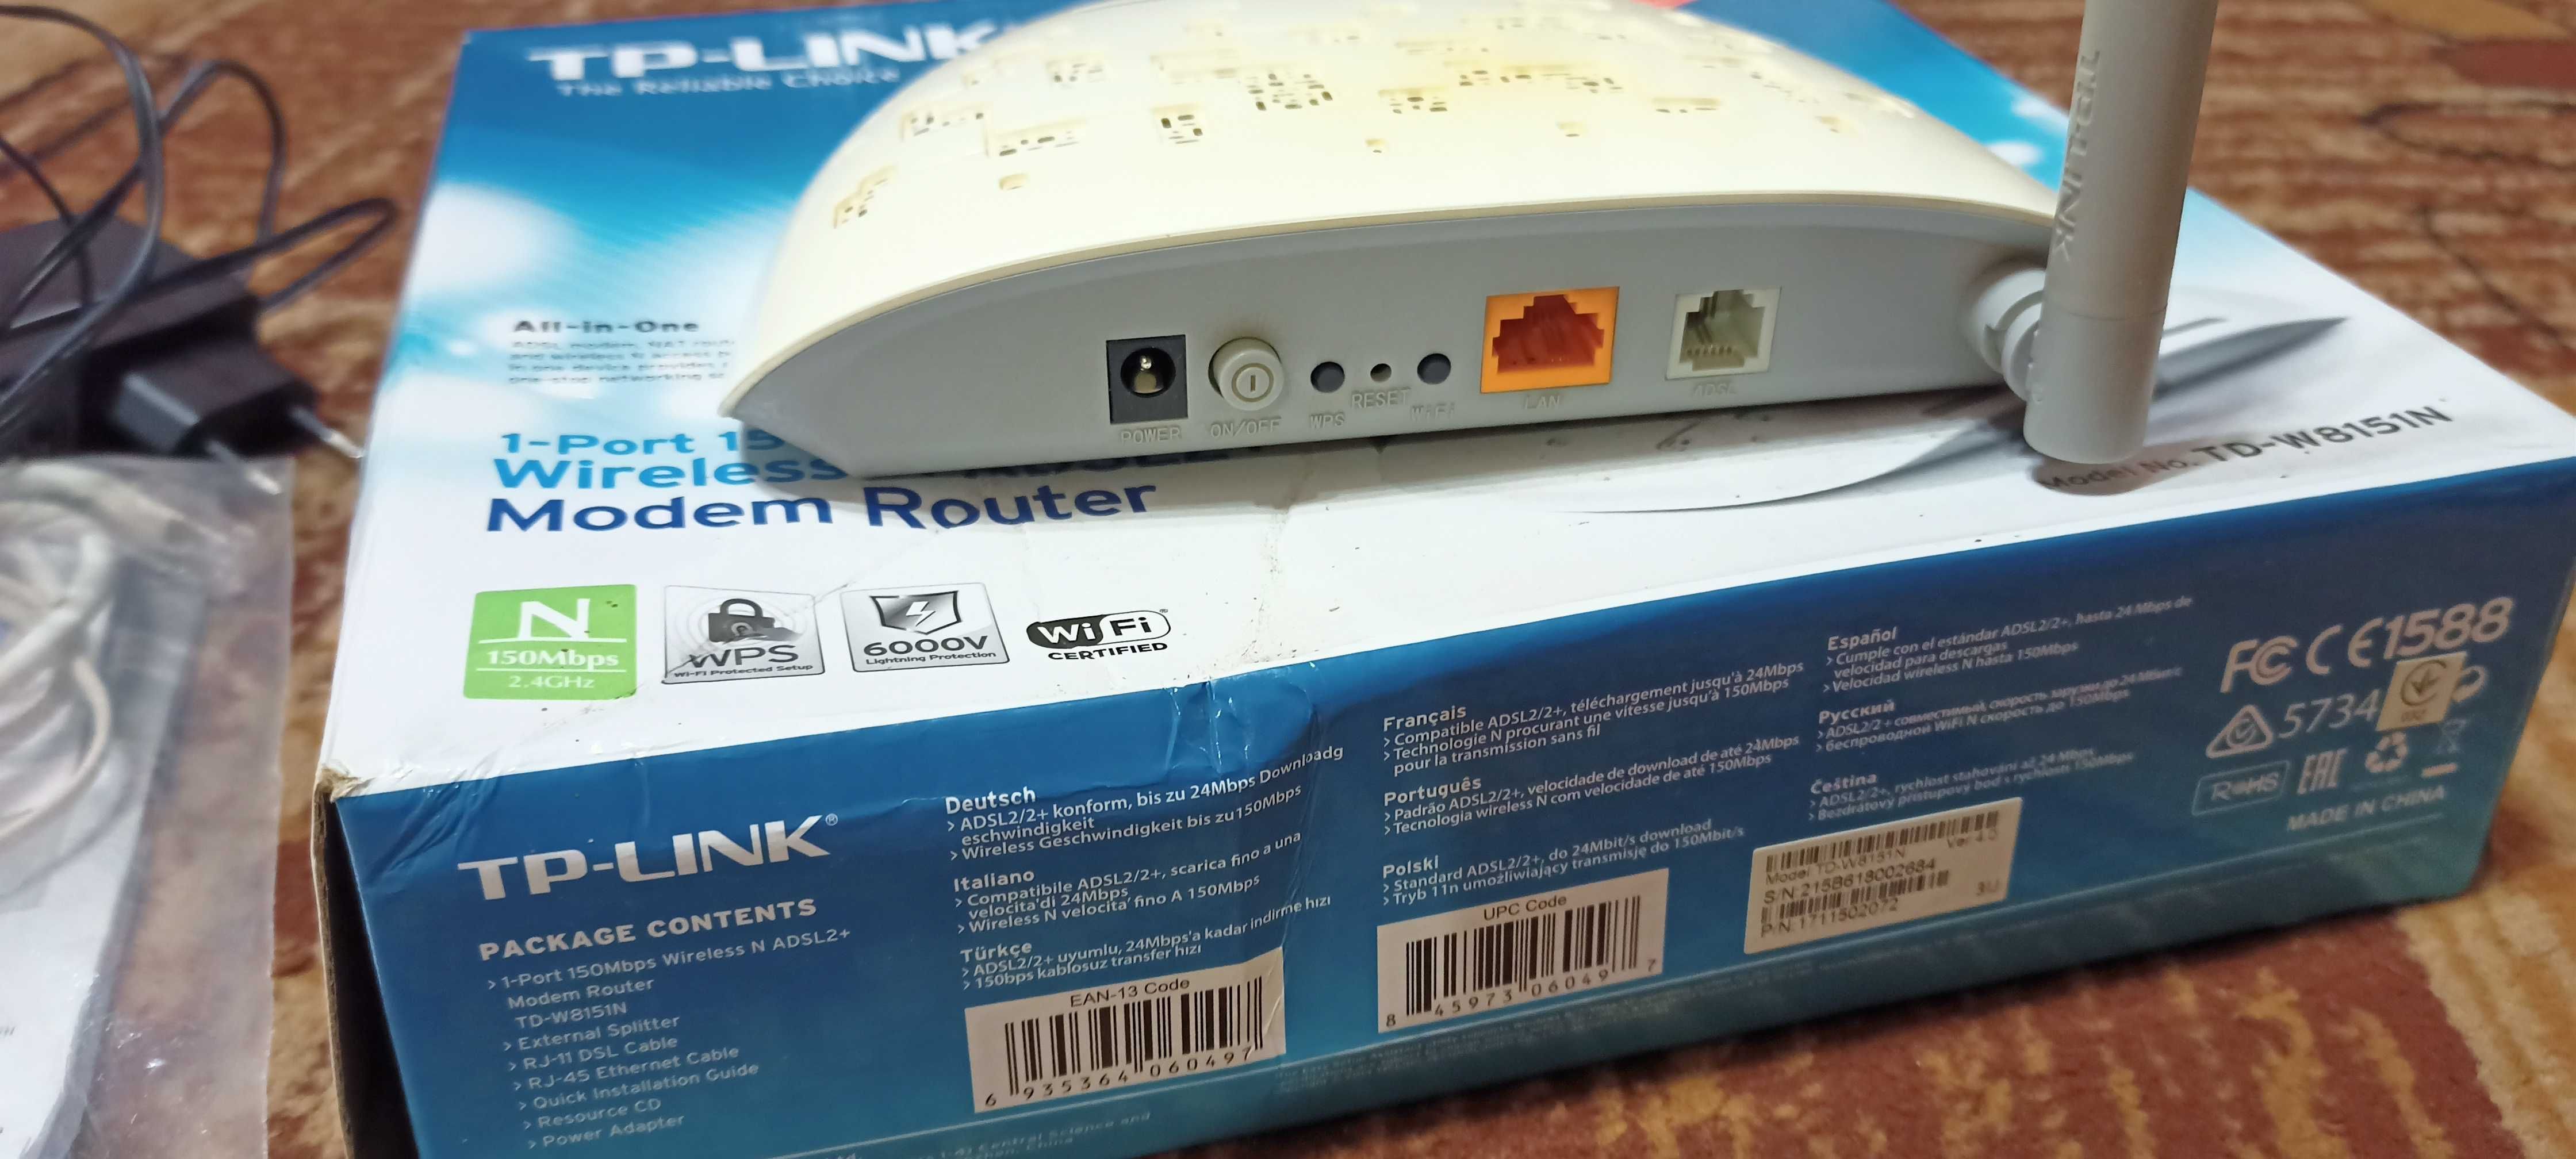 Продам ADSL WI-FI router TP-LINK, model TD-W8151N, б/у,робочий.